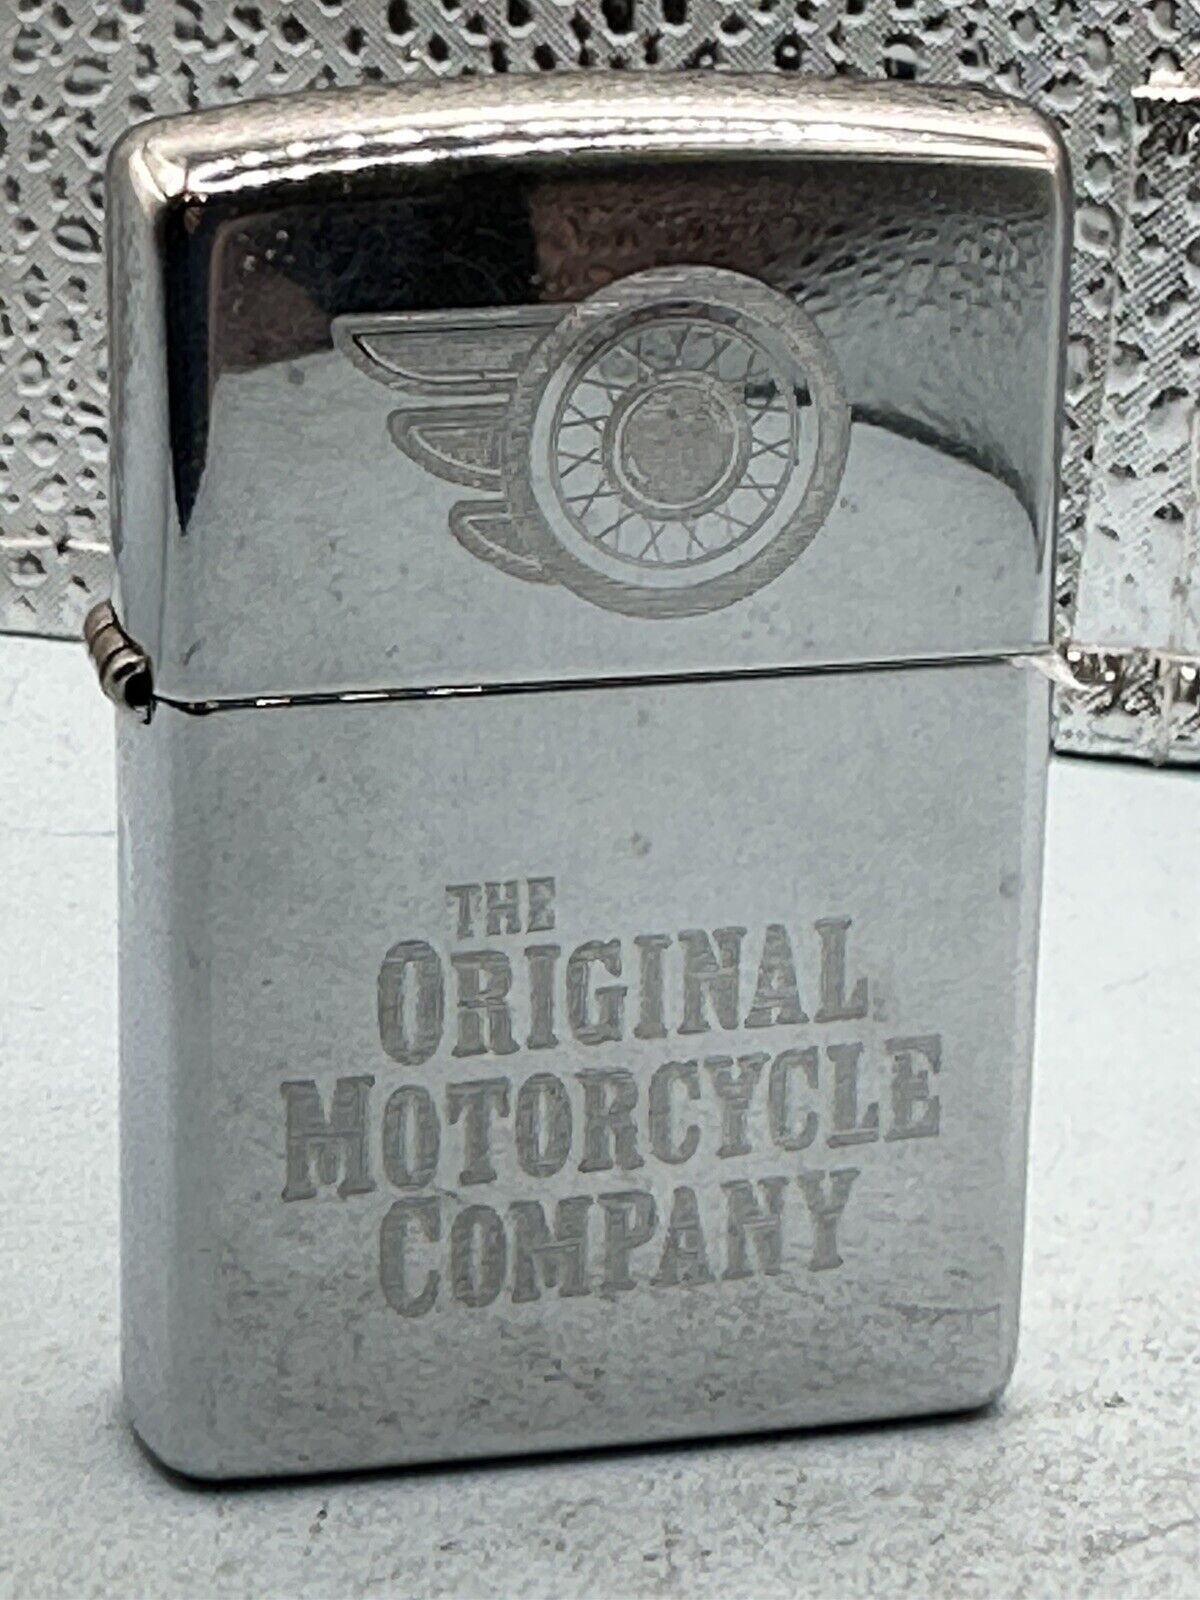 Vintage 2005 Indian Original Motorcycle Company High Polish Chrome Zippo Lighter